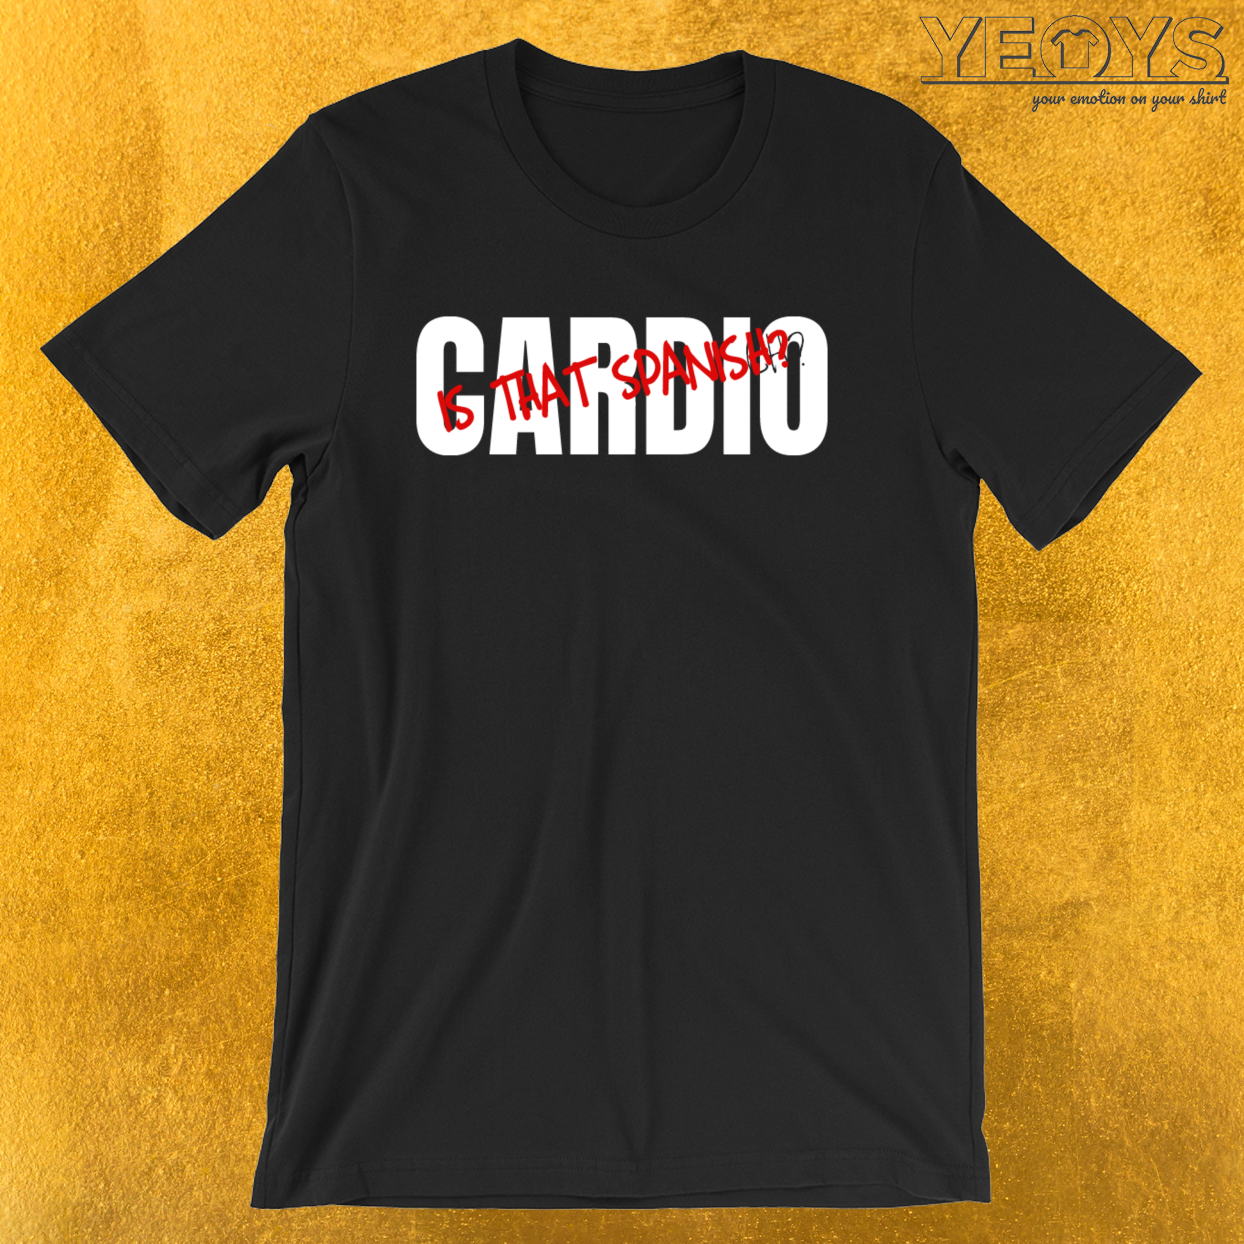 Cardio Is that Spanish – Cardio Tee